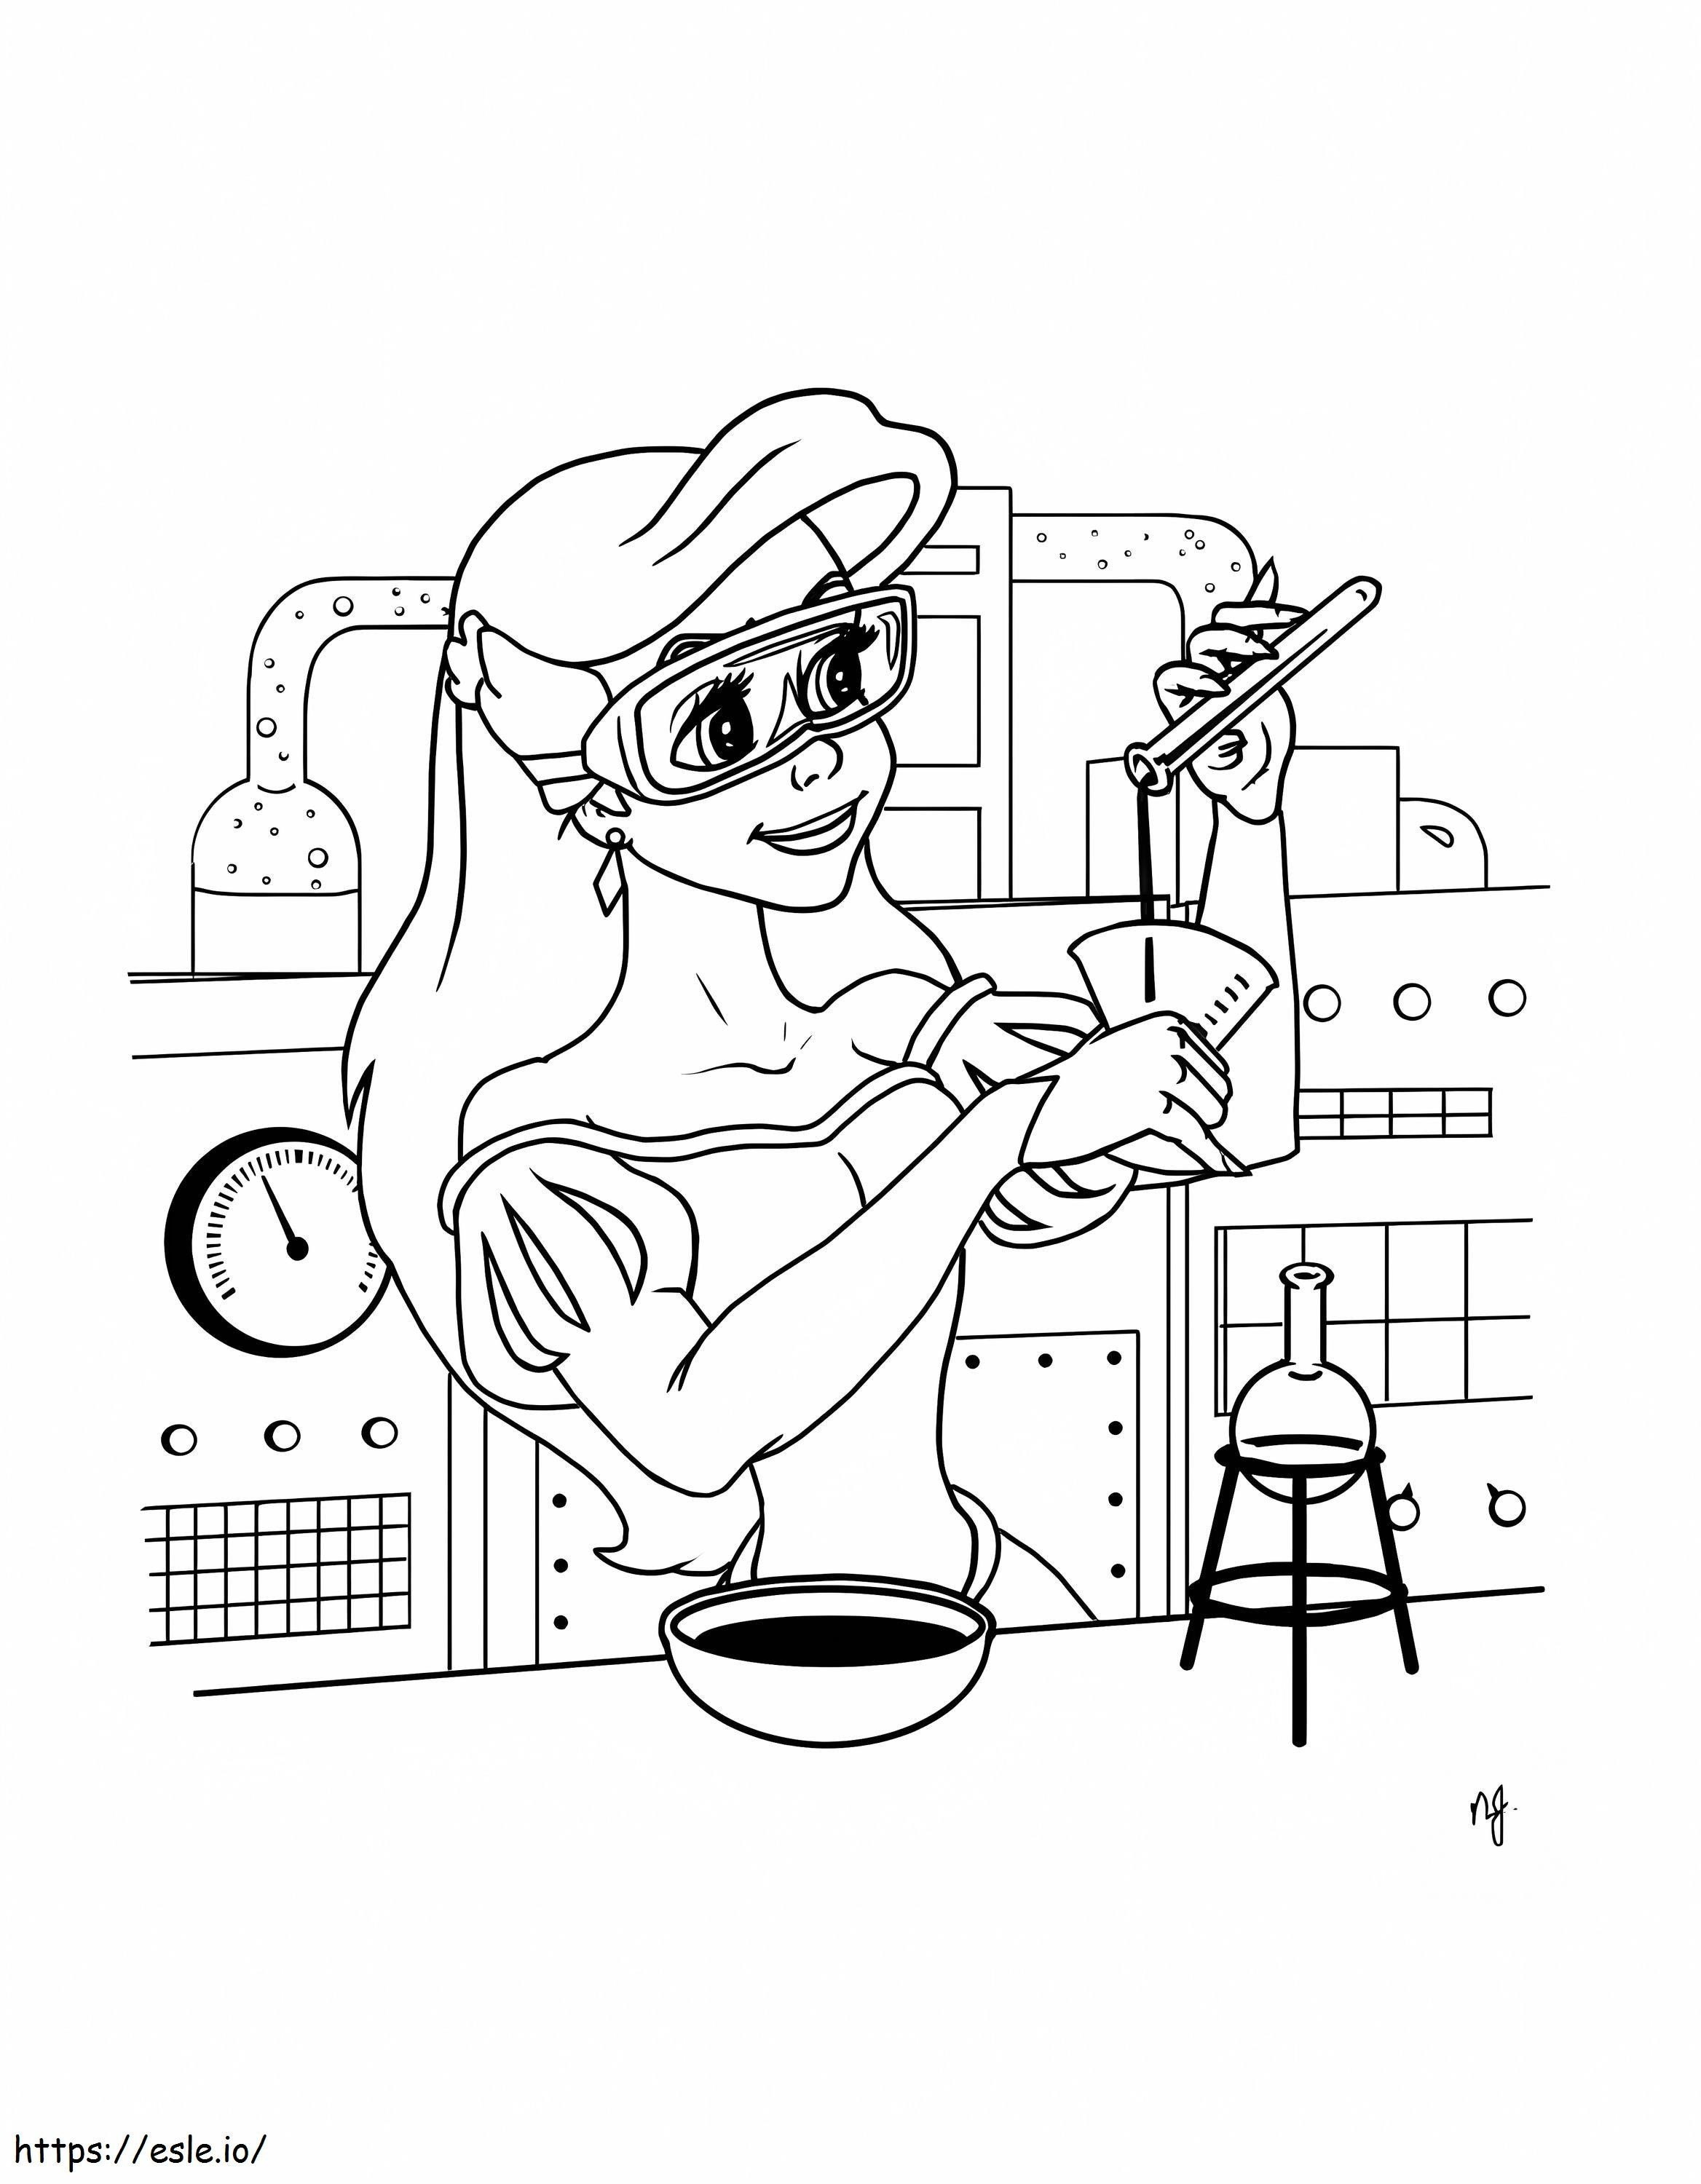 Barbie Scientist coloring page